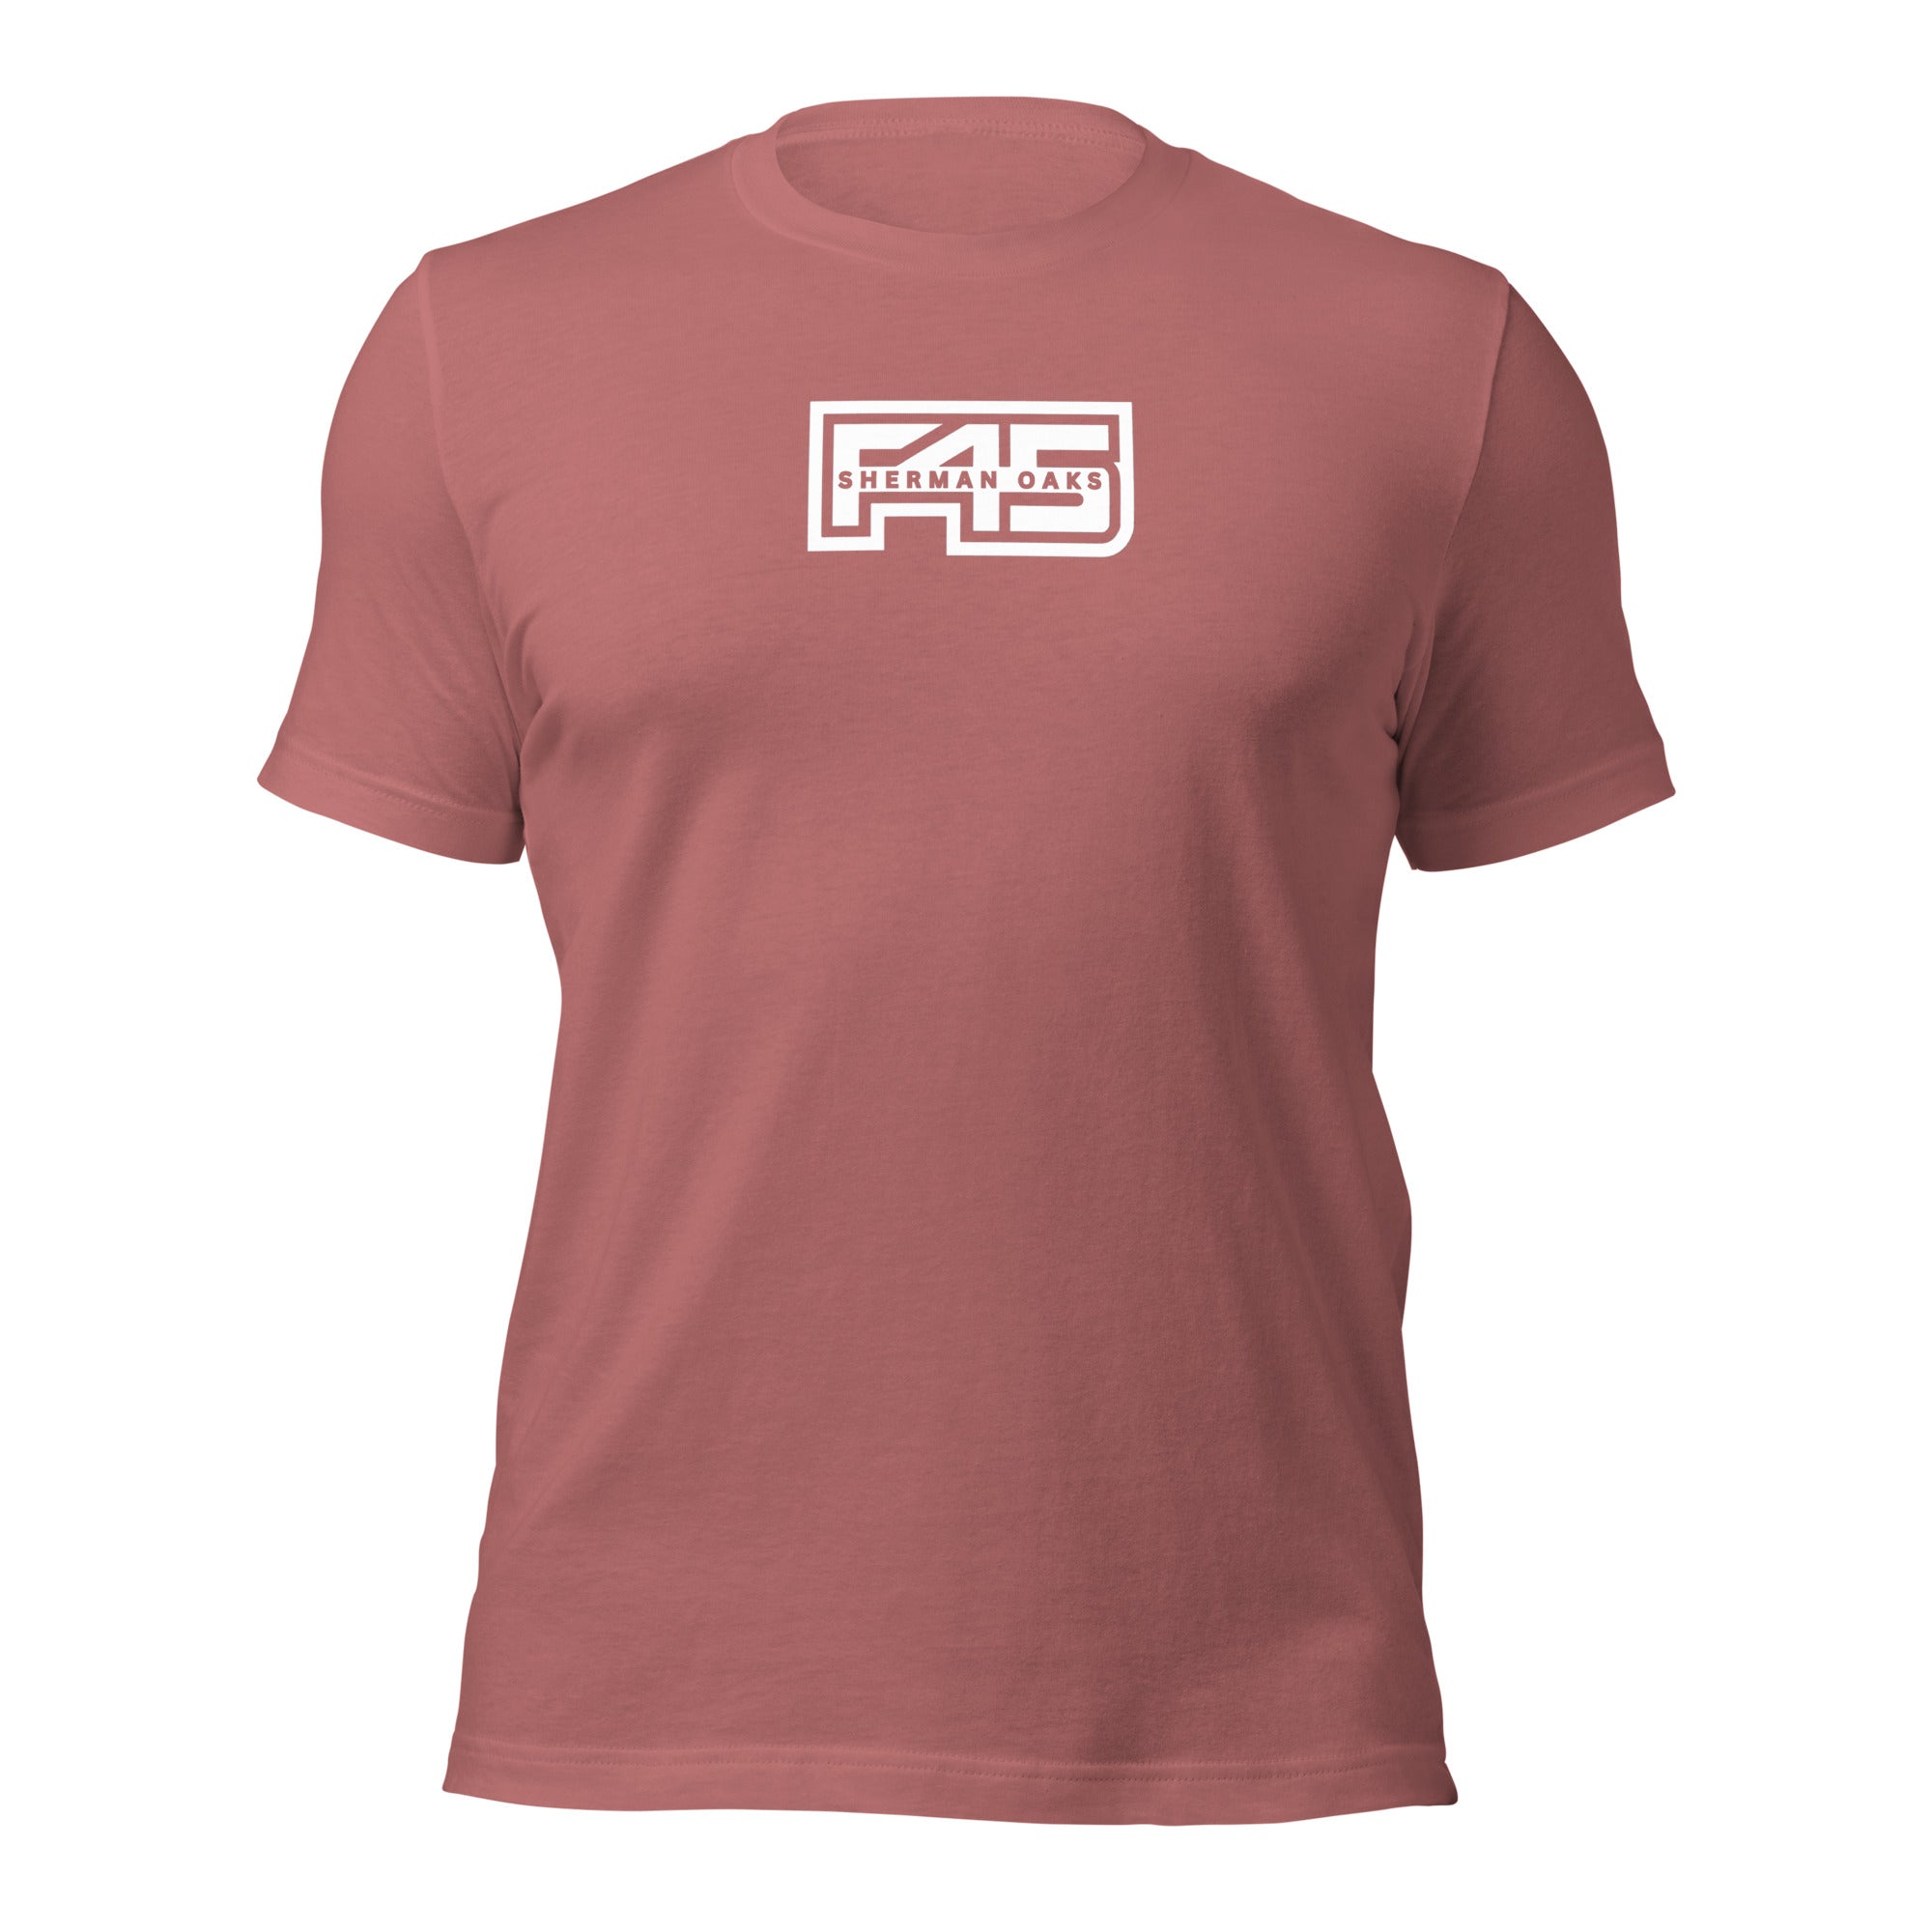 F45 Sherman Oaks Shirt